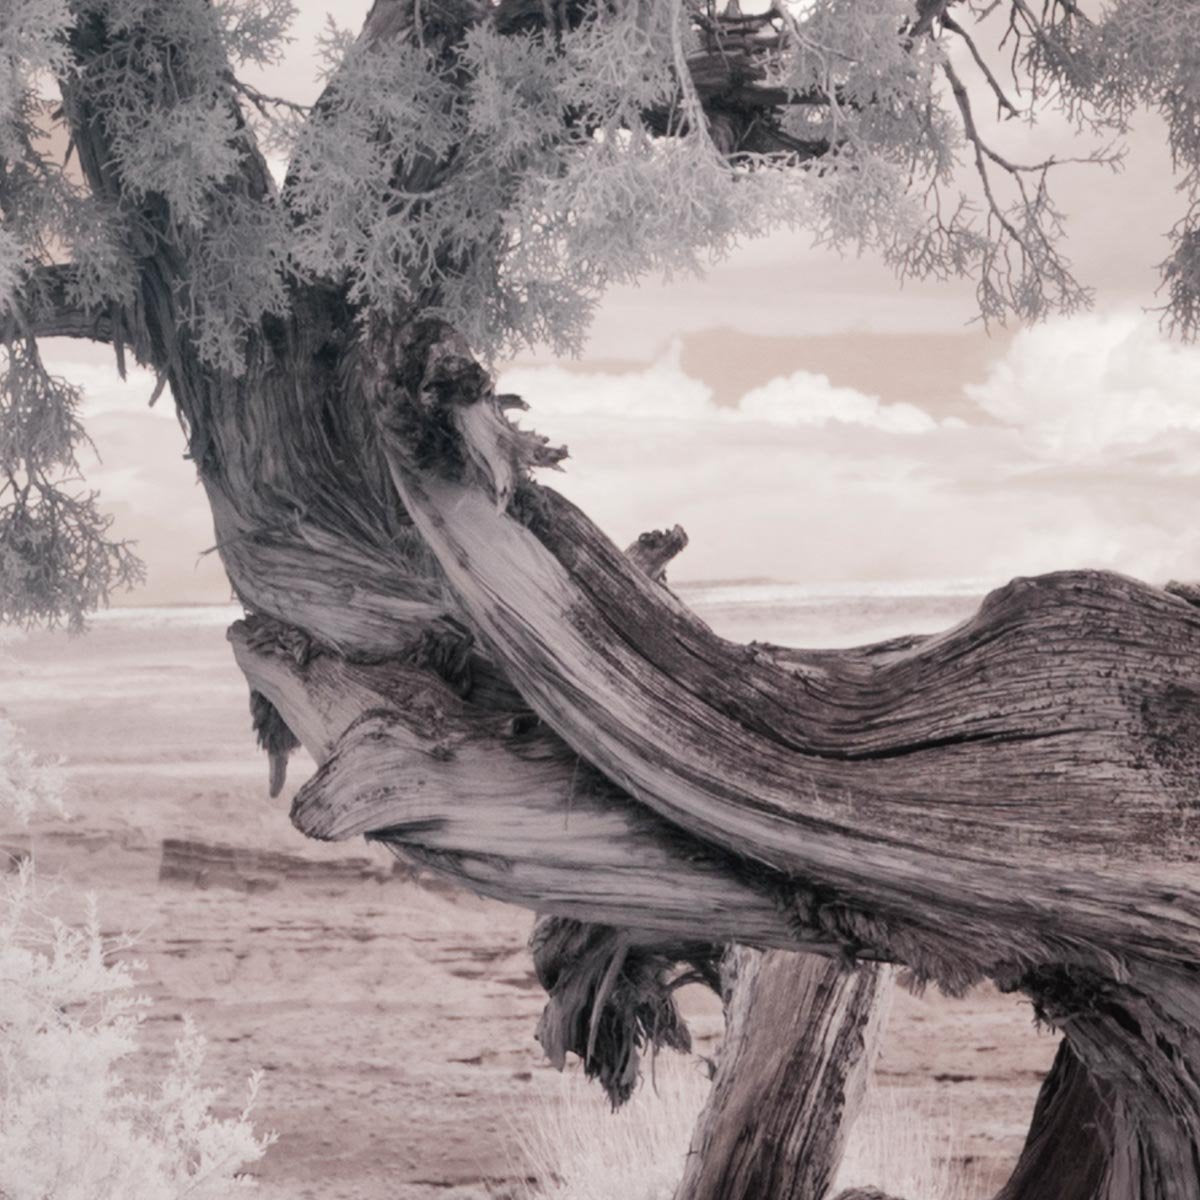 Infared View of a Twisted Tree near the Salton Sea by Carol M. Highsmith